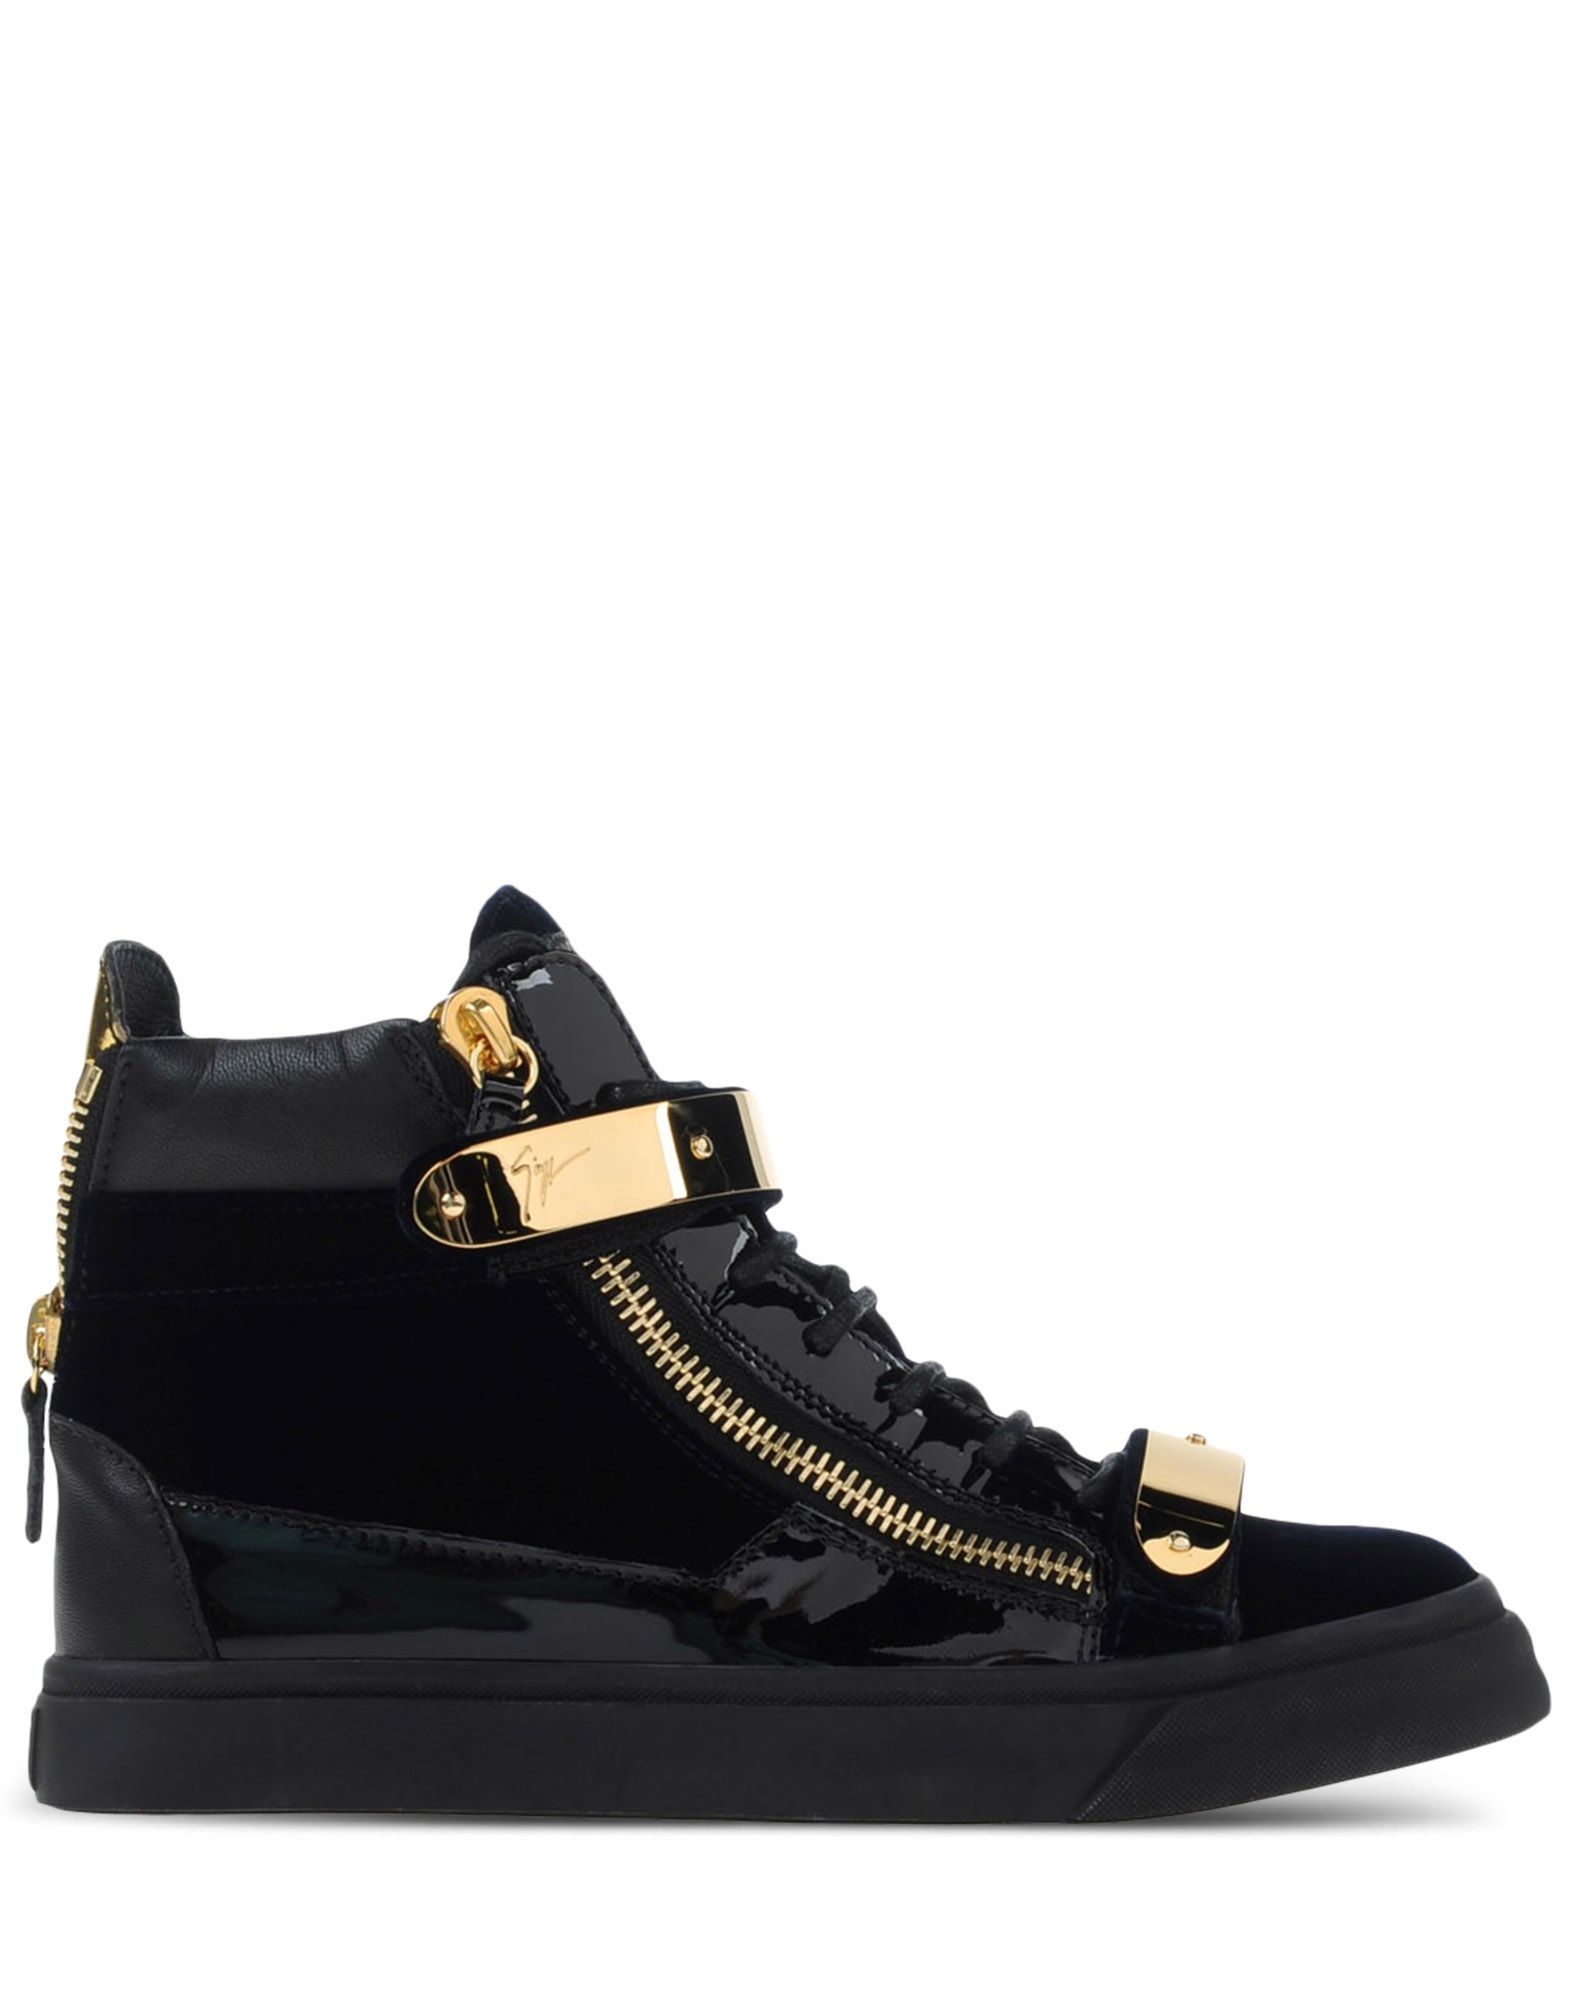 Giuseppe zanotti High-Top Sneakers in Black | Lyst